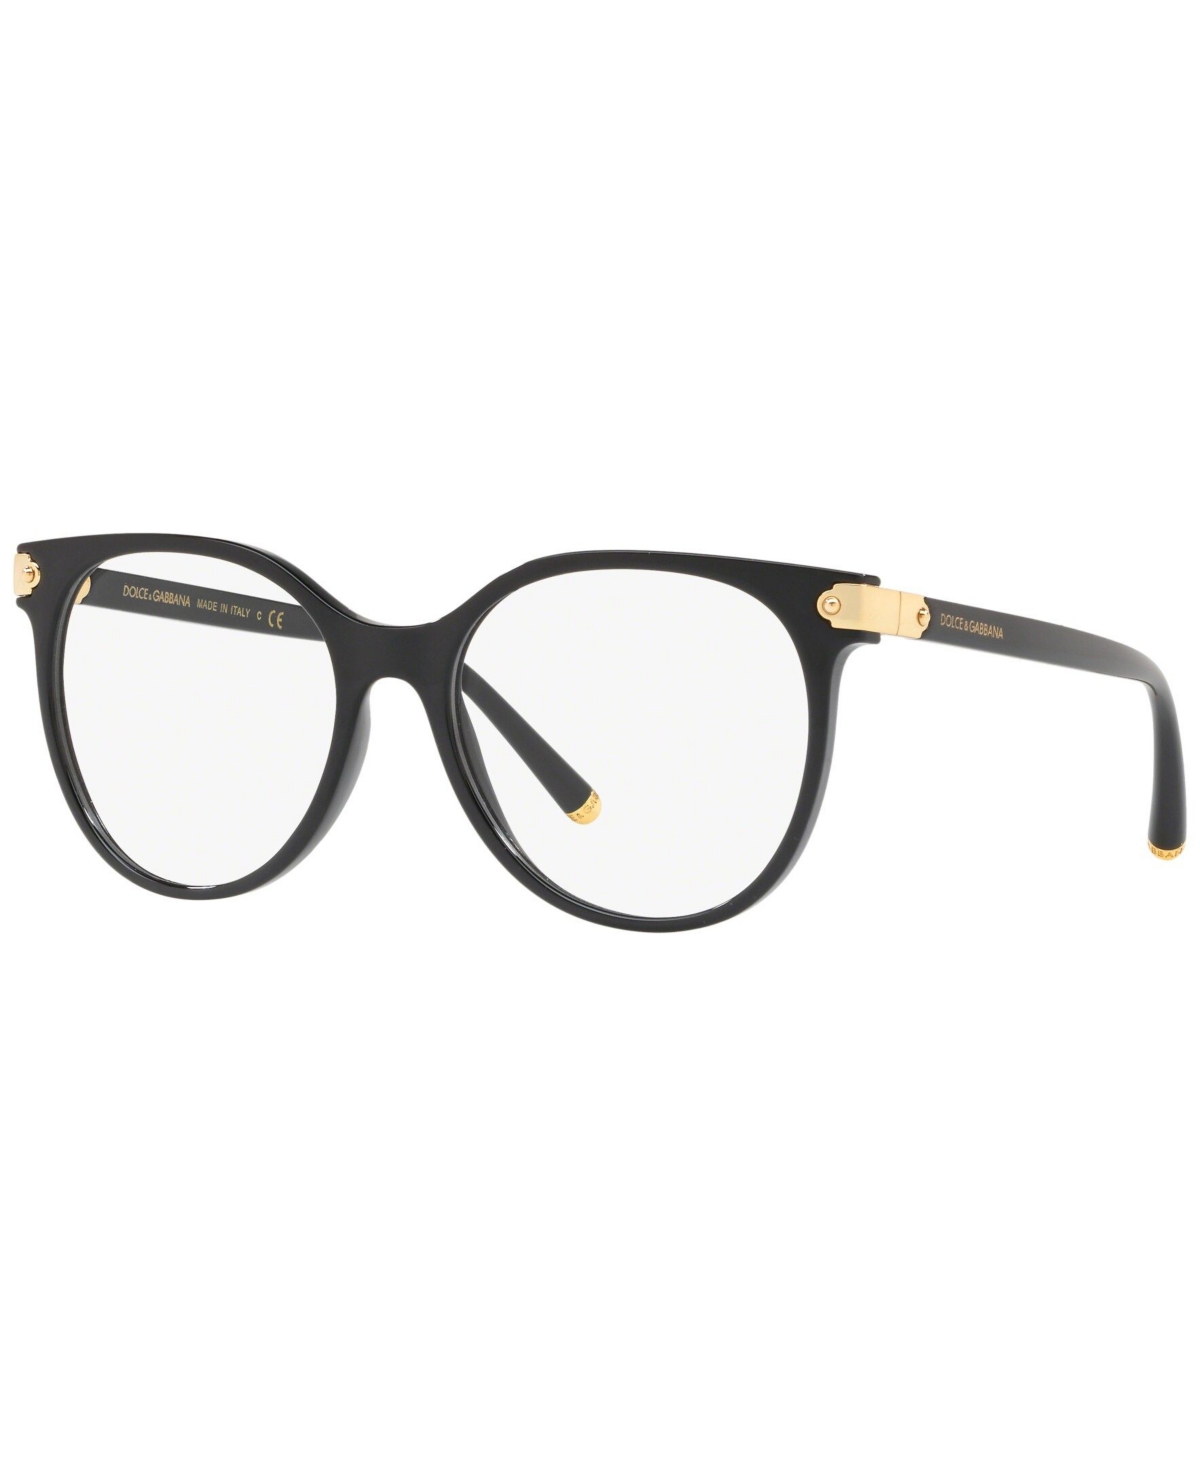 EAN 8053672858464 product image for Dolce & Gabbana DG5032 Women's Phantos Eyeglasses | upcitemdb.com